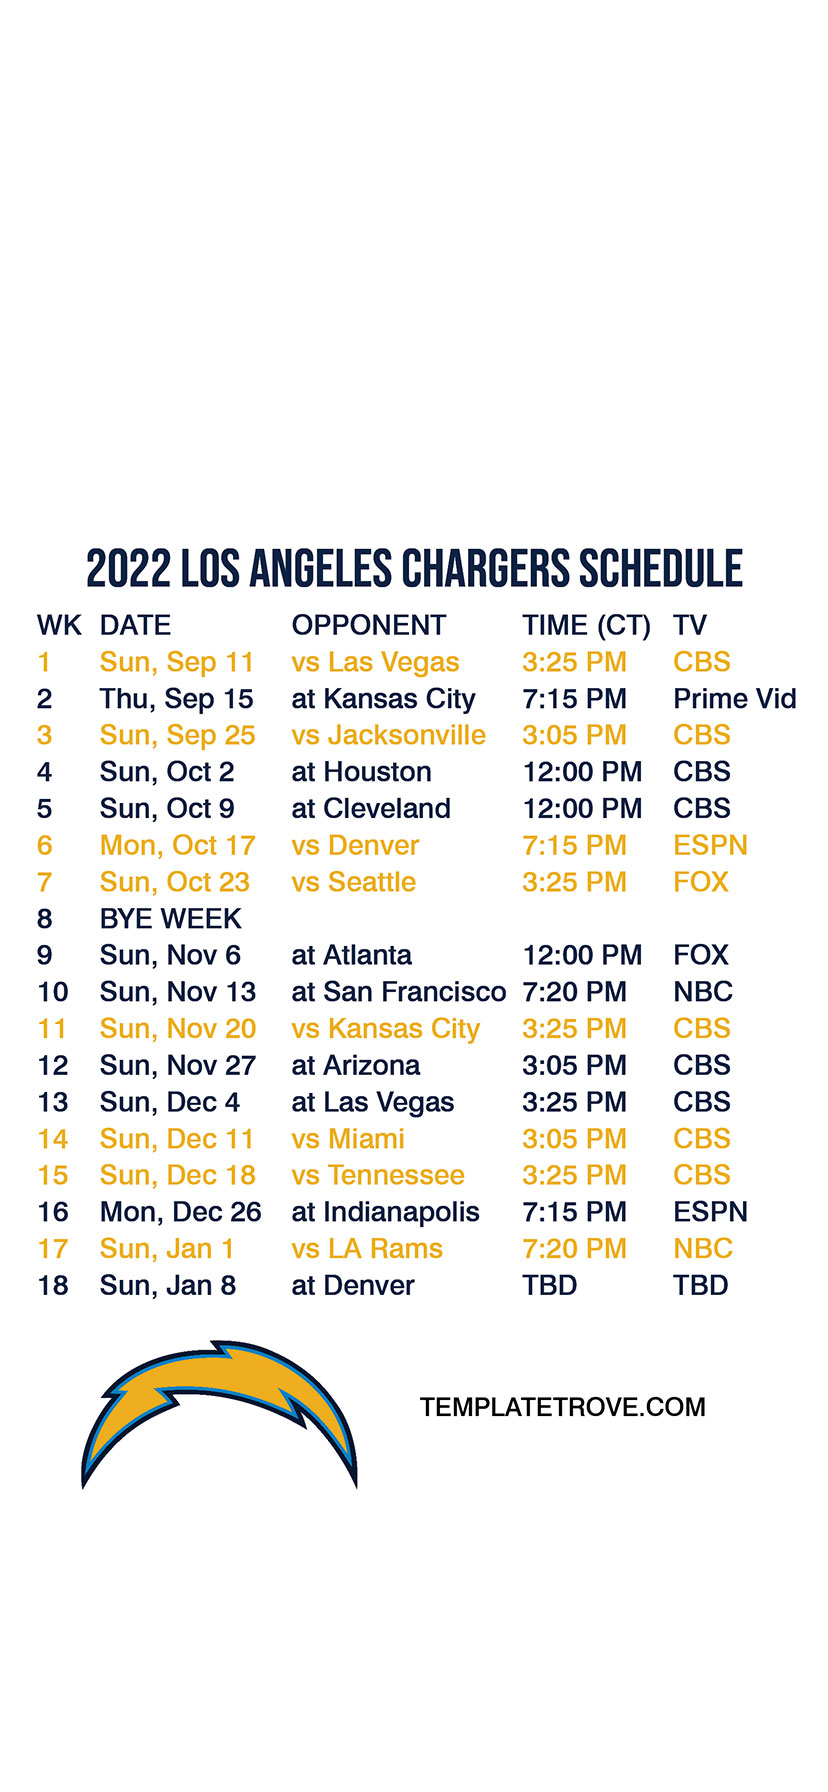 Los Angeles Chargers 2022 regular season schedule - KYMA